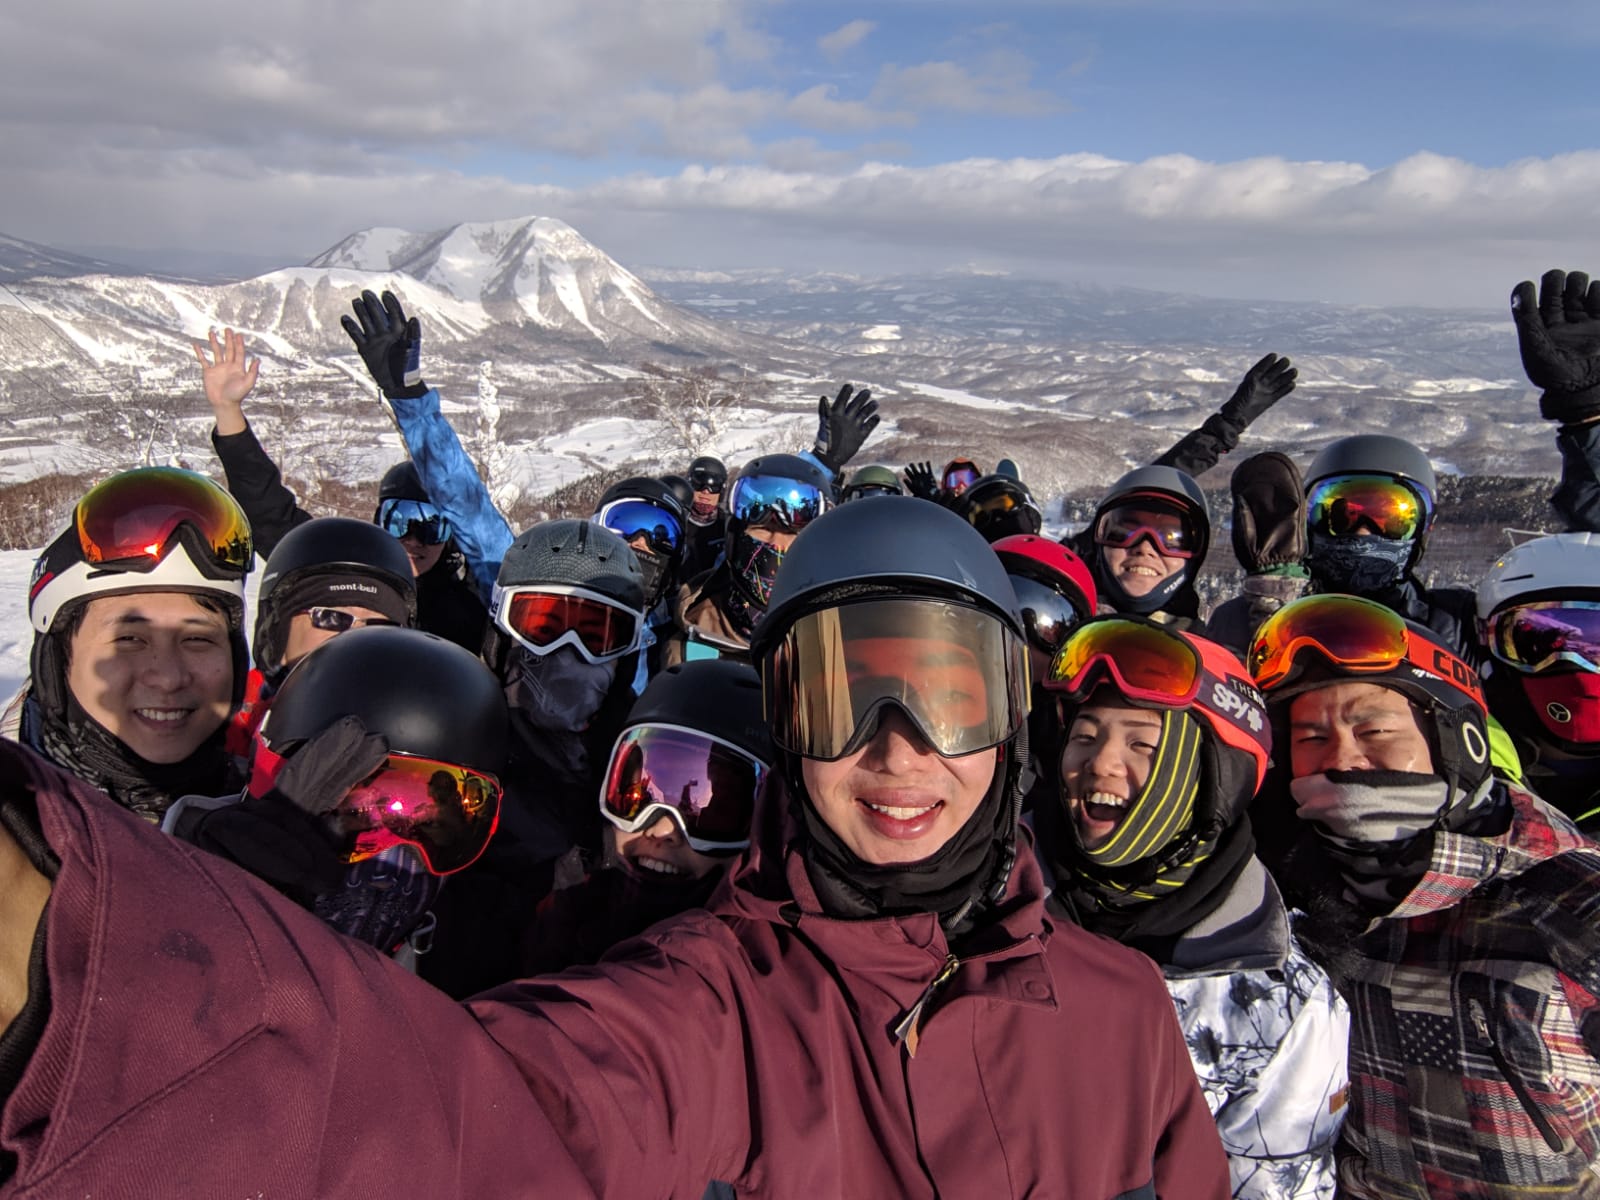 Snowboarding Alex with guests in Rusutsu, Hokkaido Japan